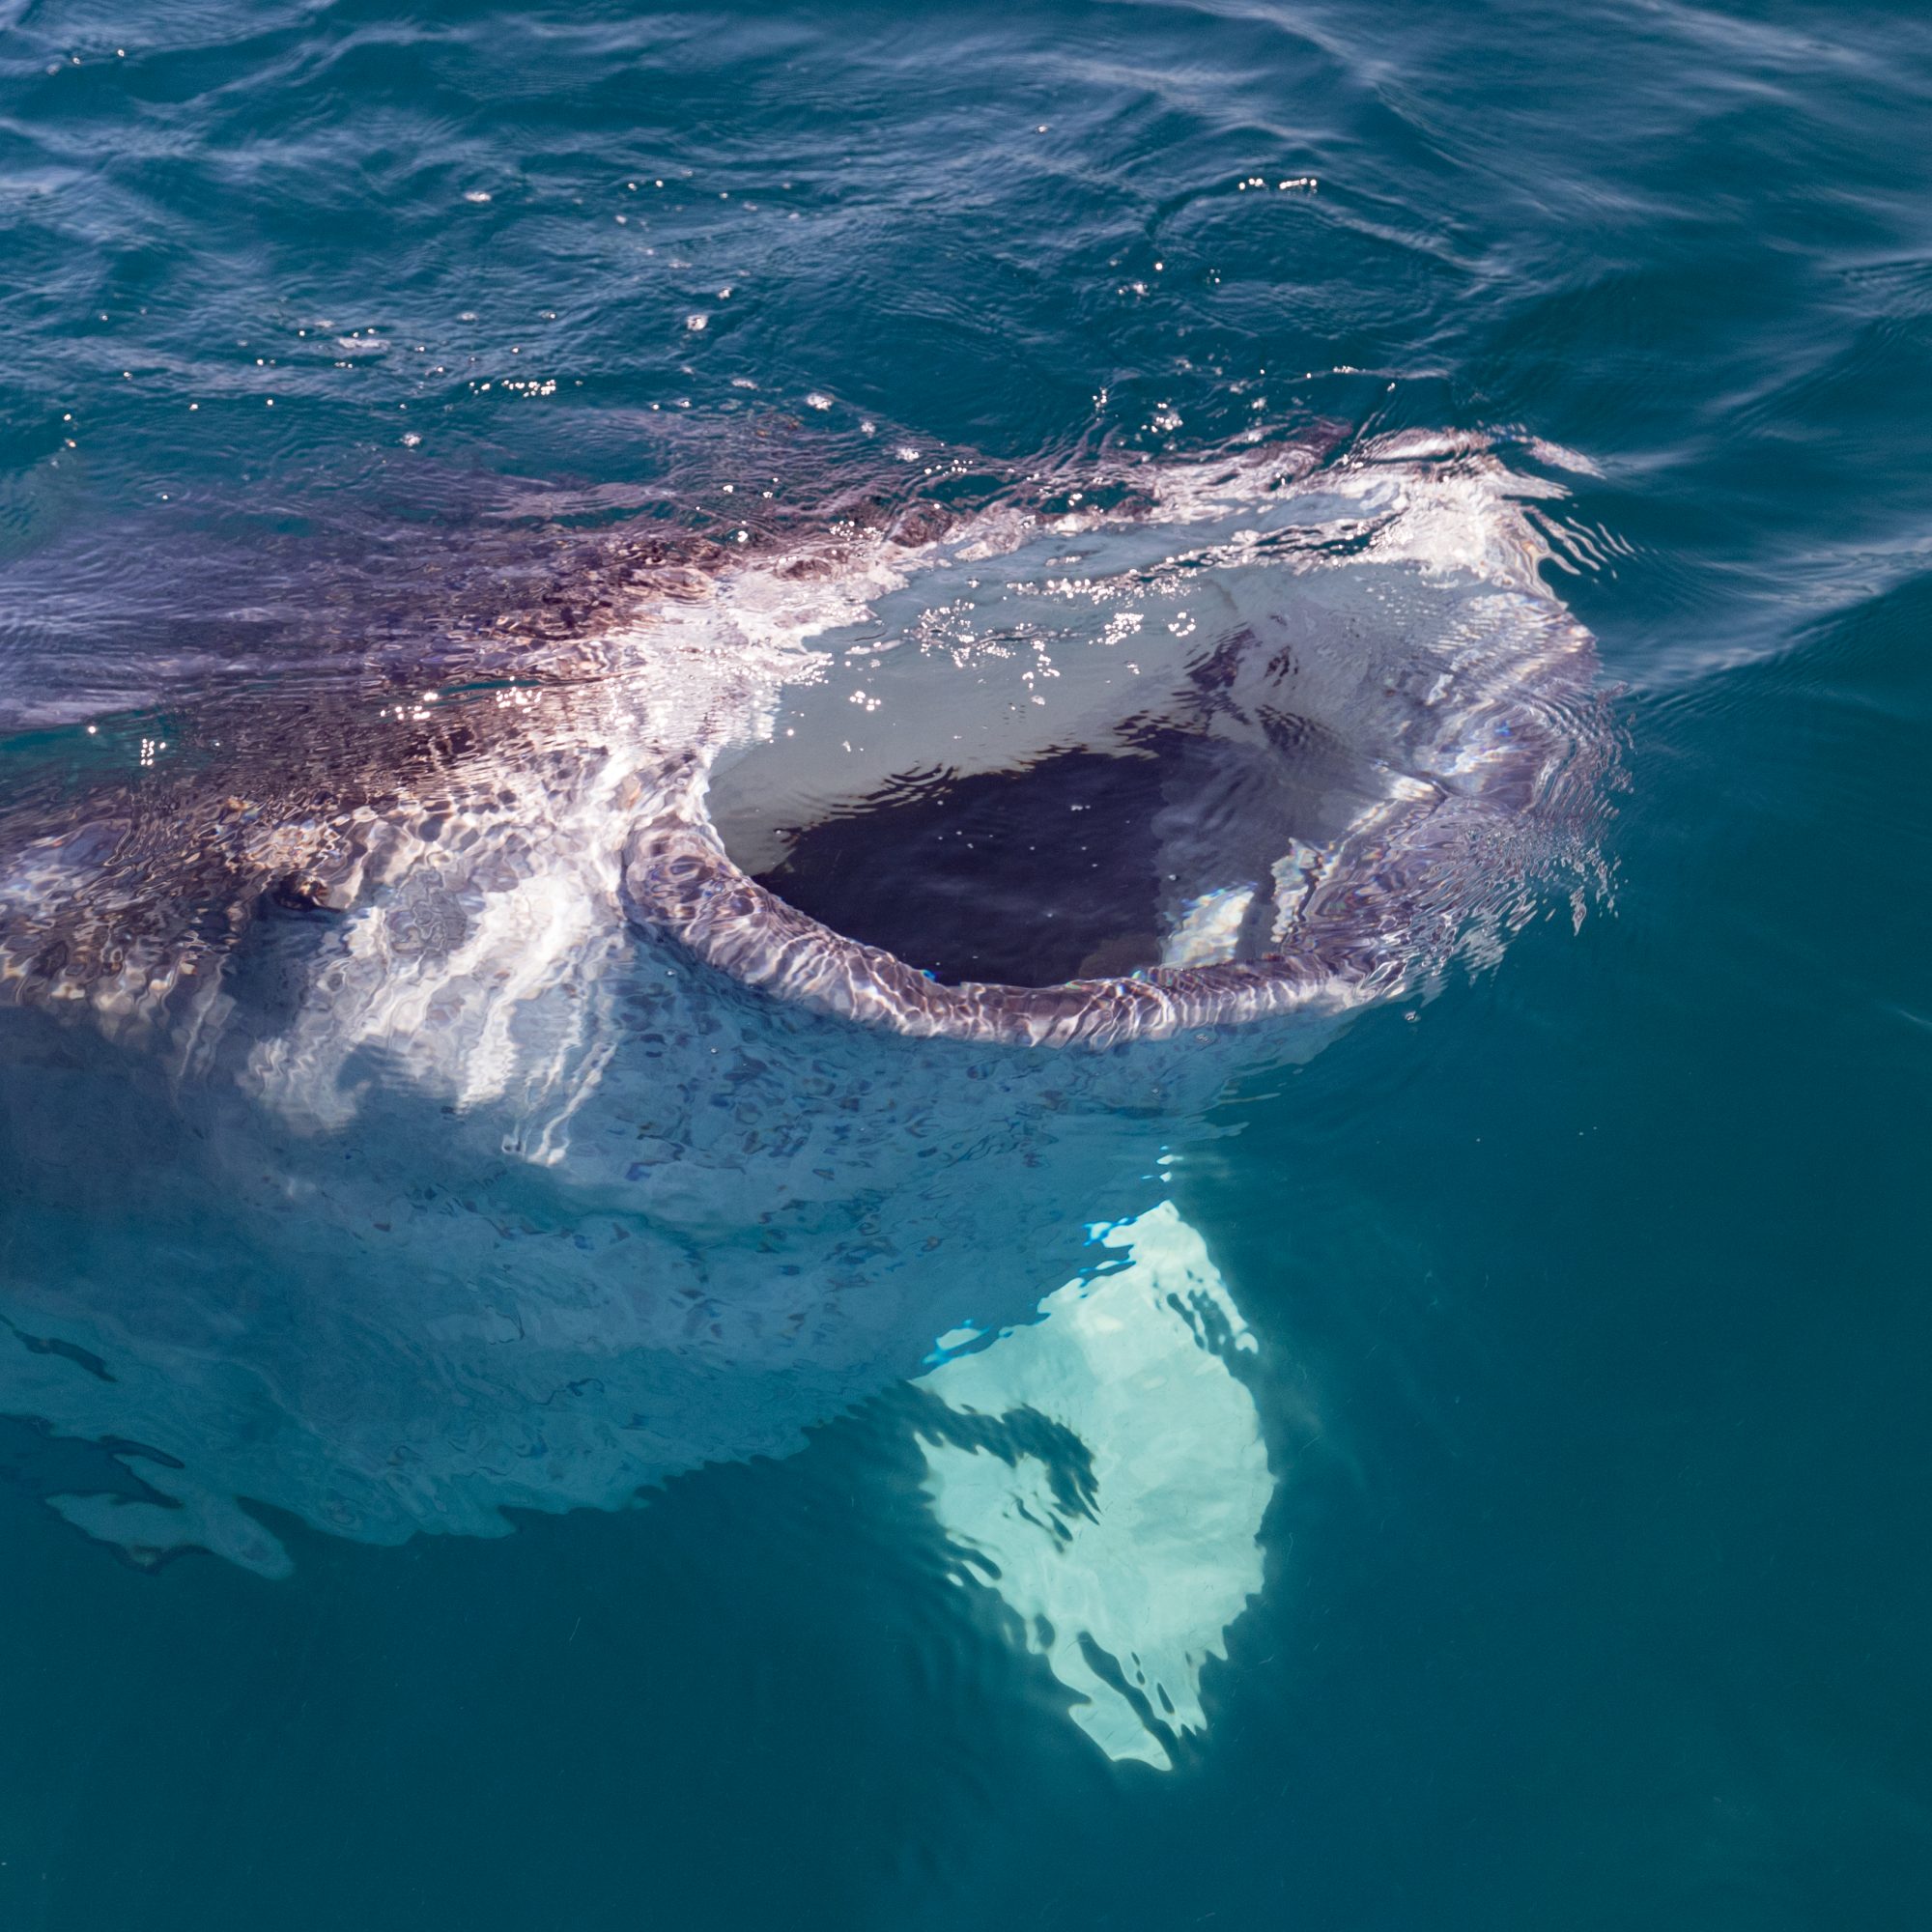 Whale Sharks impress – Sea of Cortex, Mexico 2017